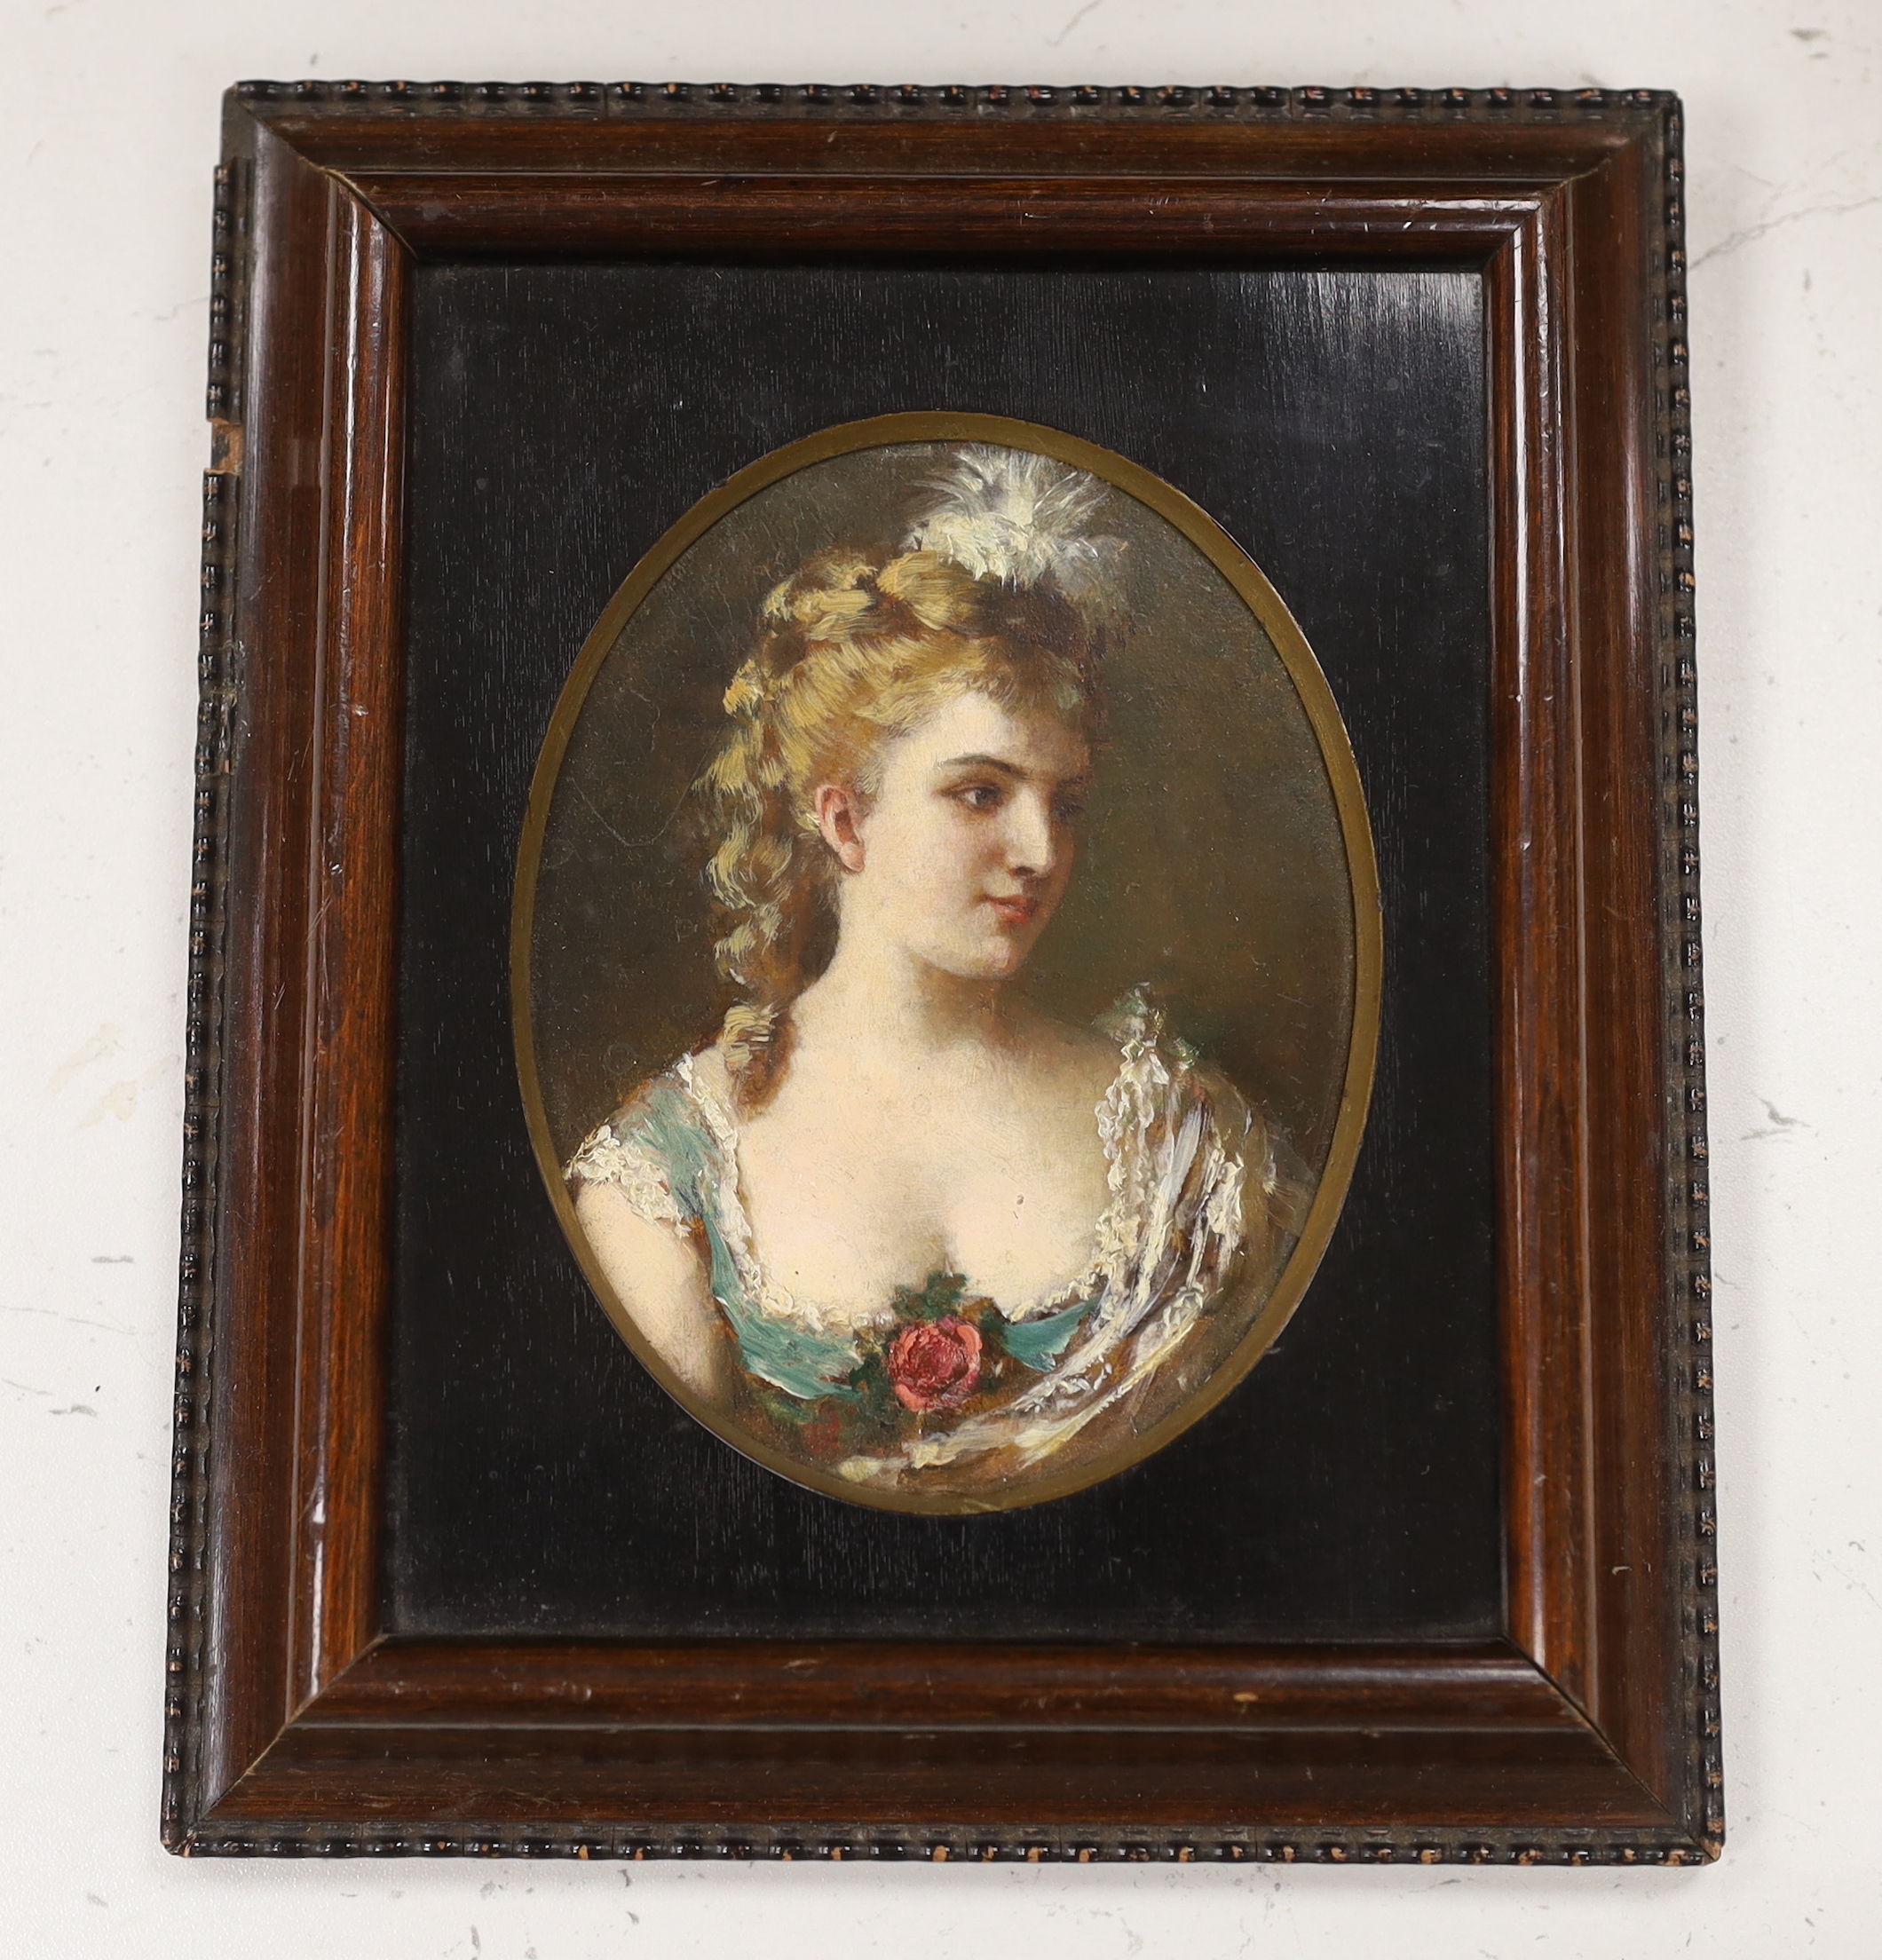 Continental School, oval portrait miniature, oil on board, Study of a beauty, 13 x 9.5cm